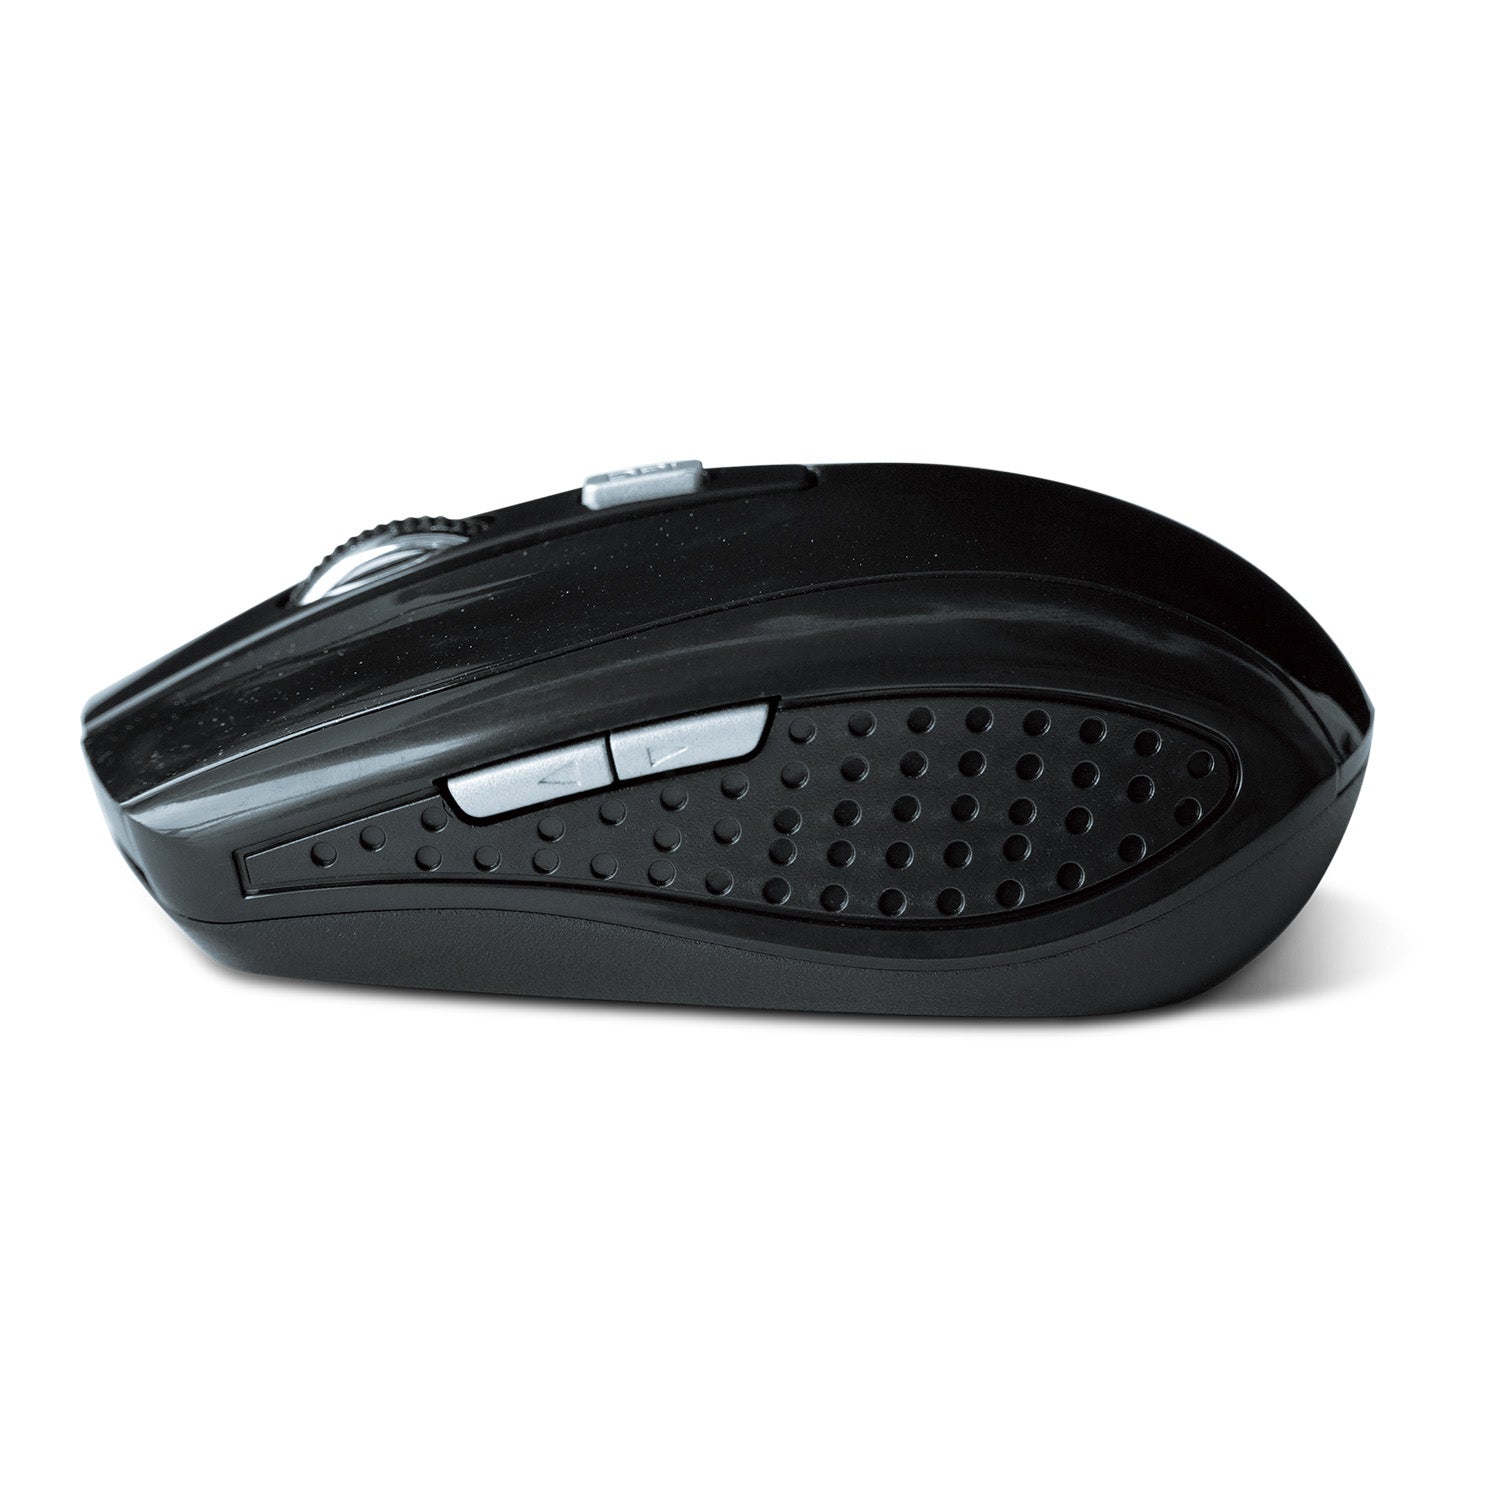 DPI Wireless Mouse